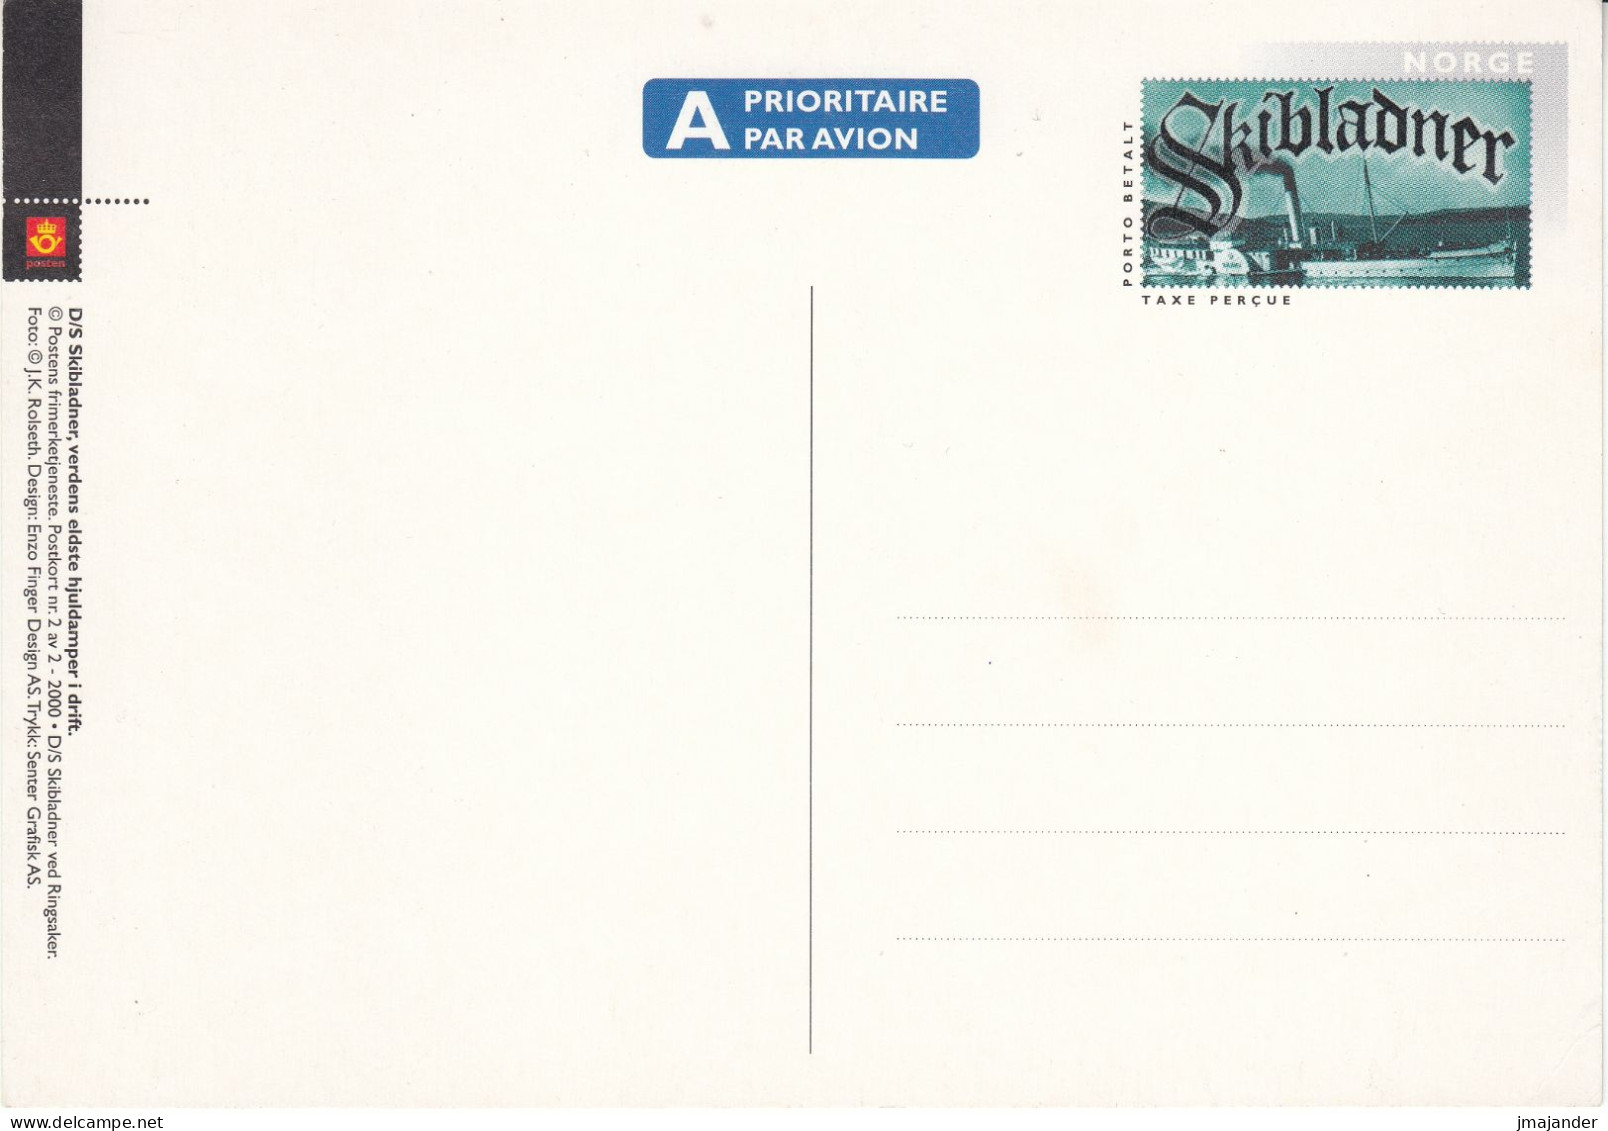 Norway 2000 - D/S Skibladner, Paddle Steamer - Postal Stationery Card ** MNH - Entiers Postaux